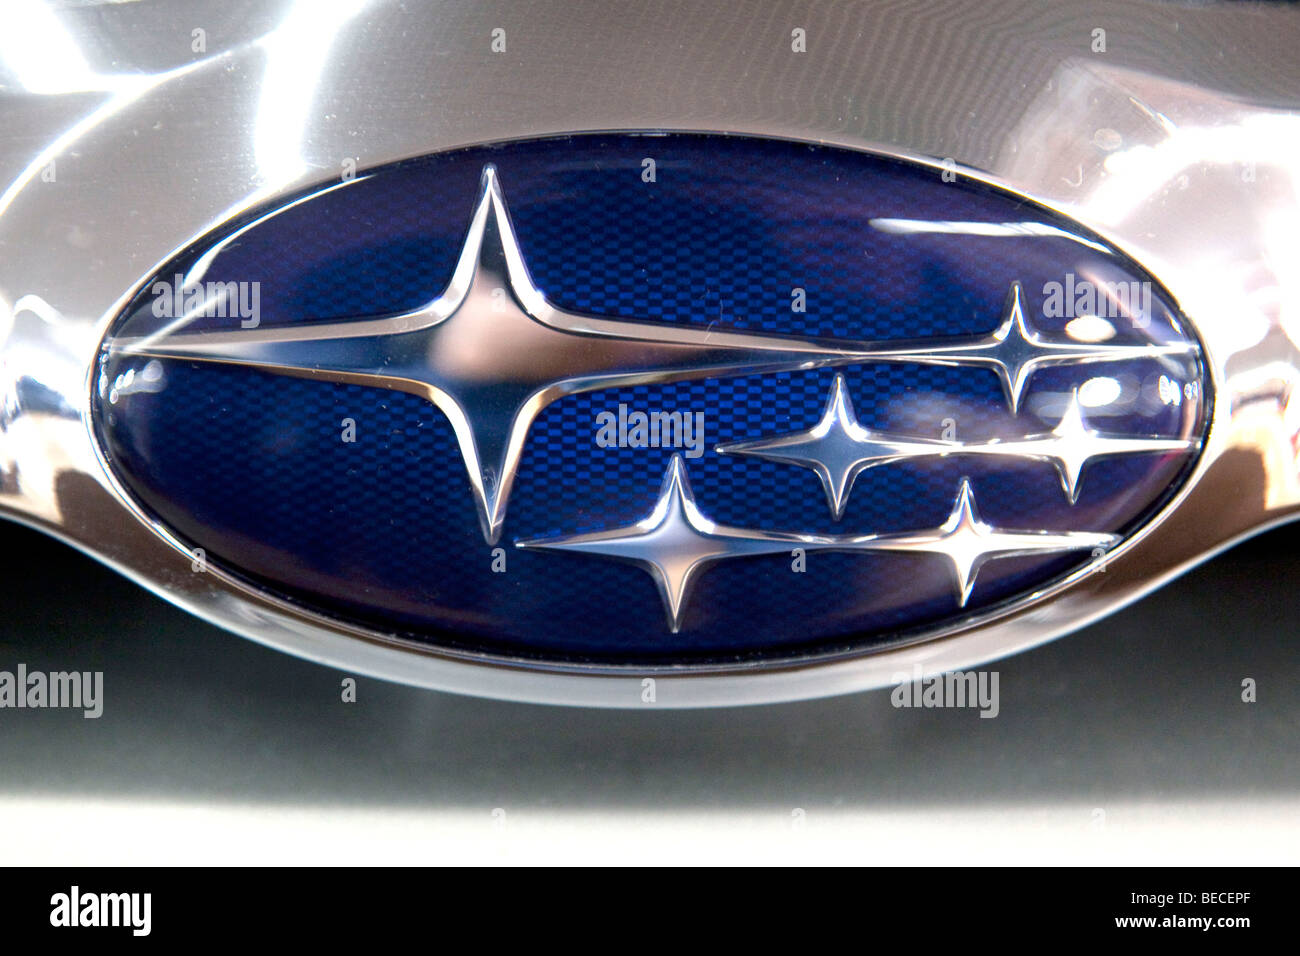 Subaru emblem on a car Stock Photo